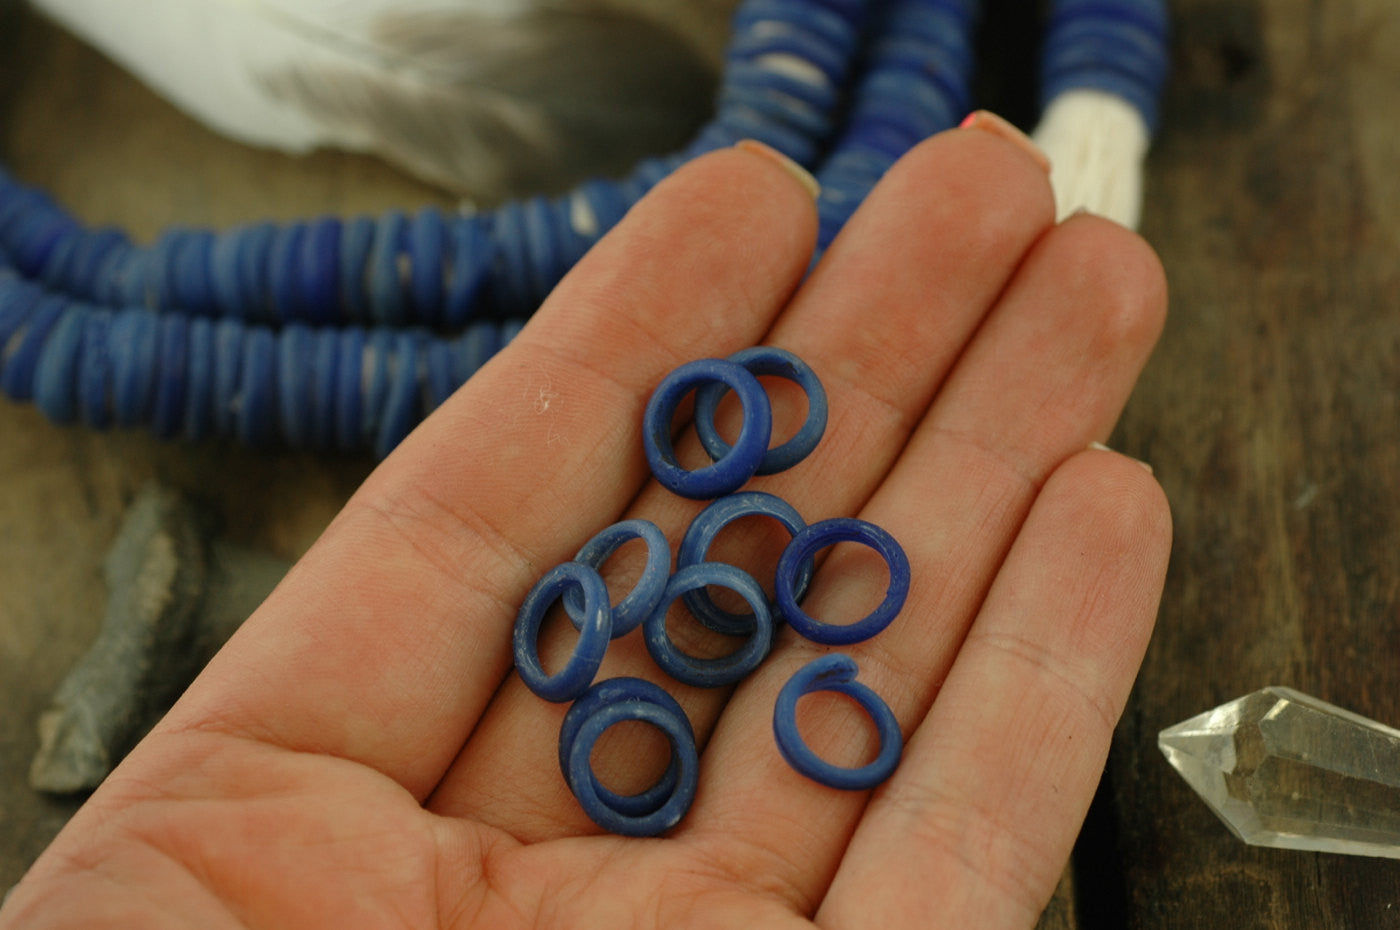 Blue Dutch Donut Dogan Beads from Mali, 11-12mm, 10 pieces - ShopWomanShopsWorld.com. Bone Beads, Tassels, Pom Poms, African Beads.